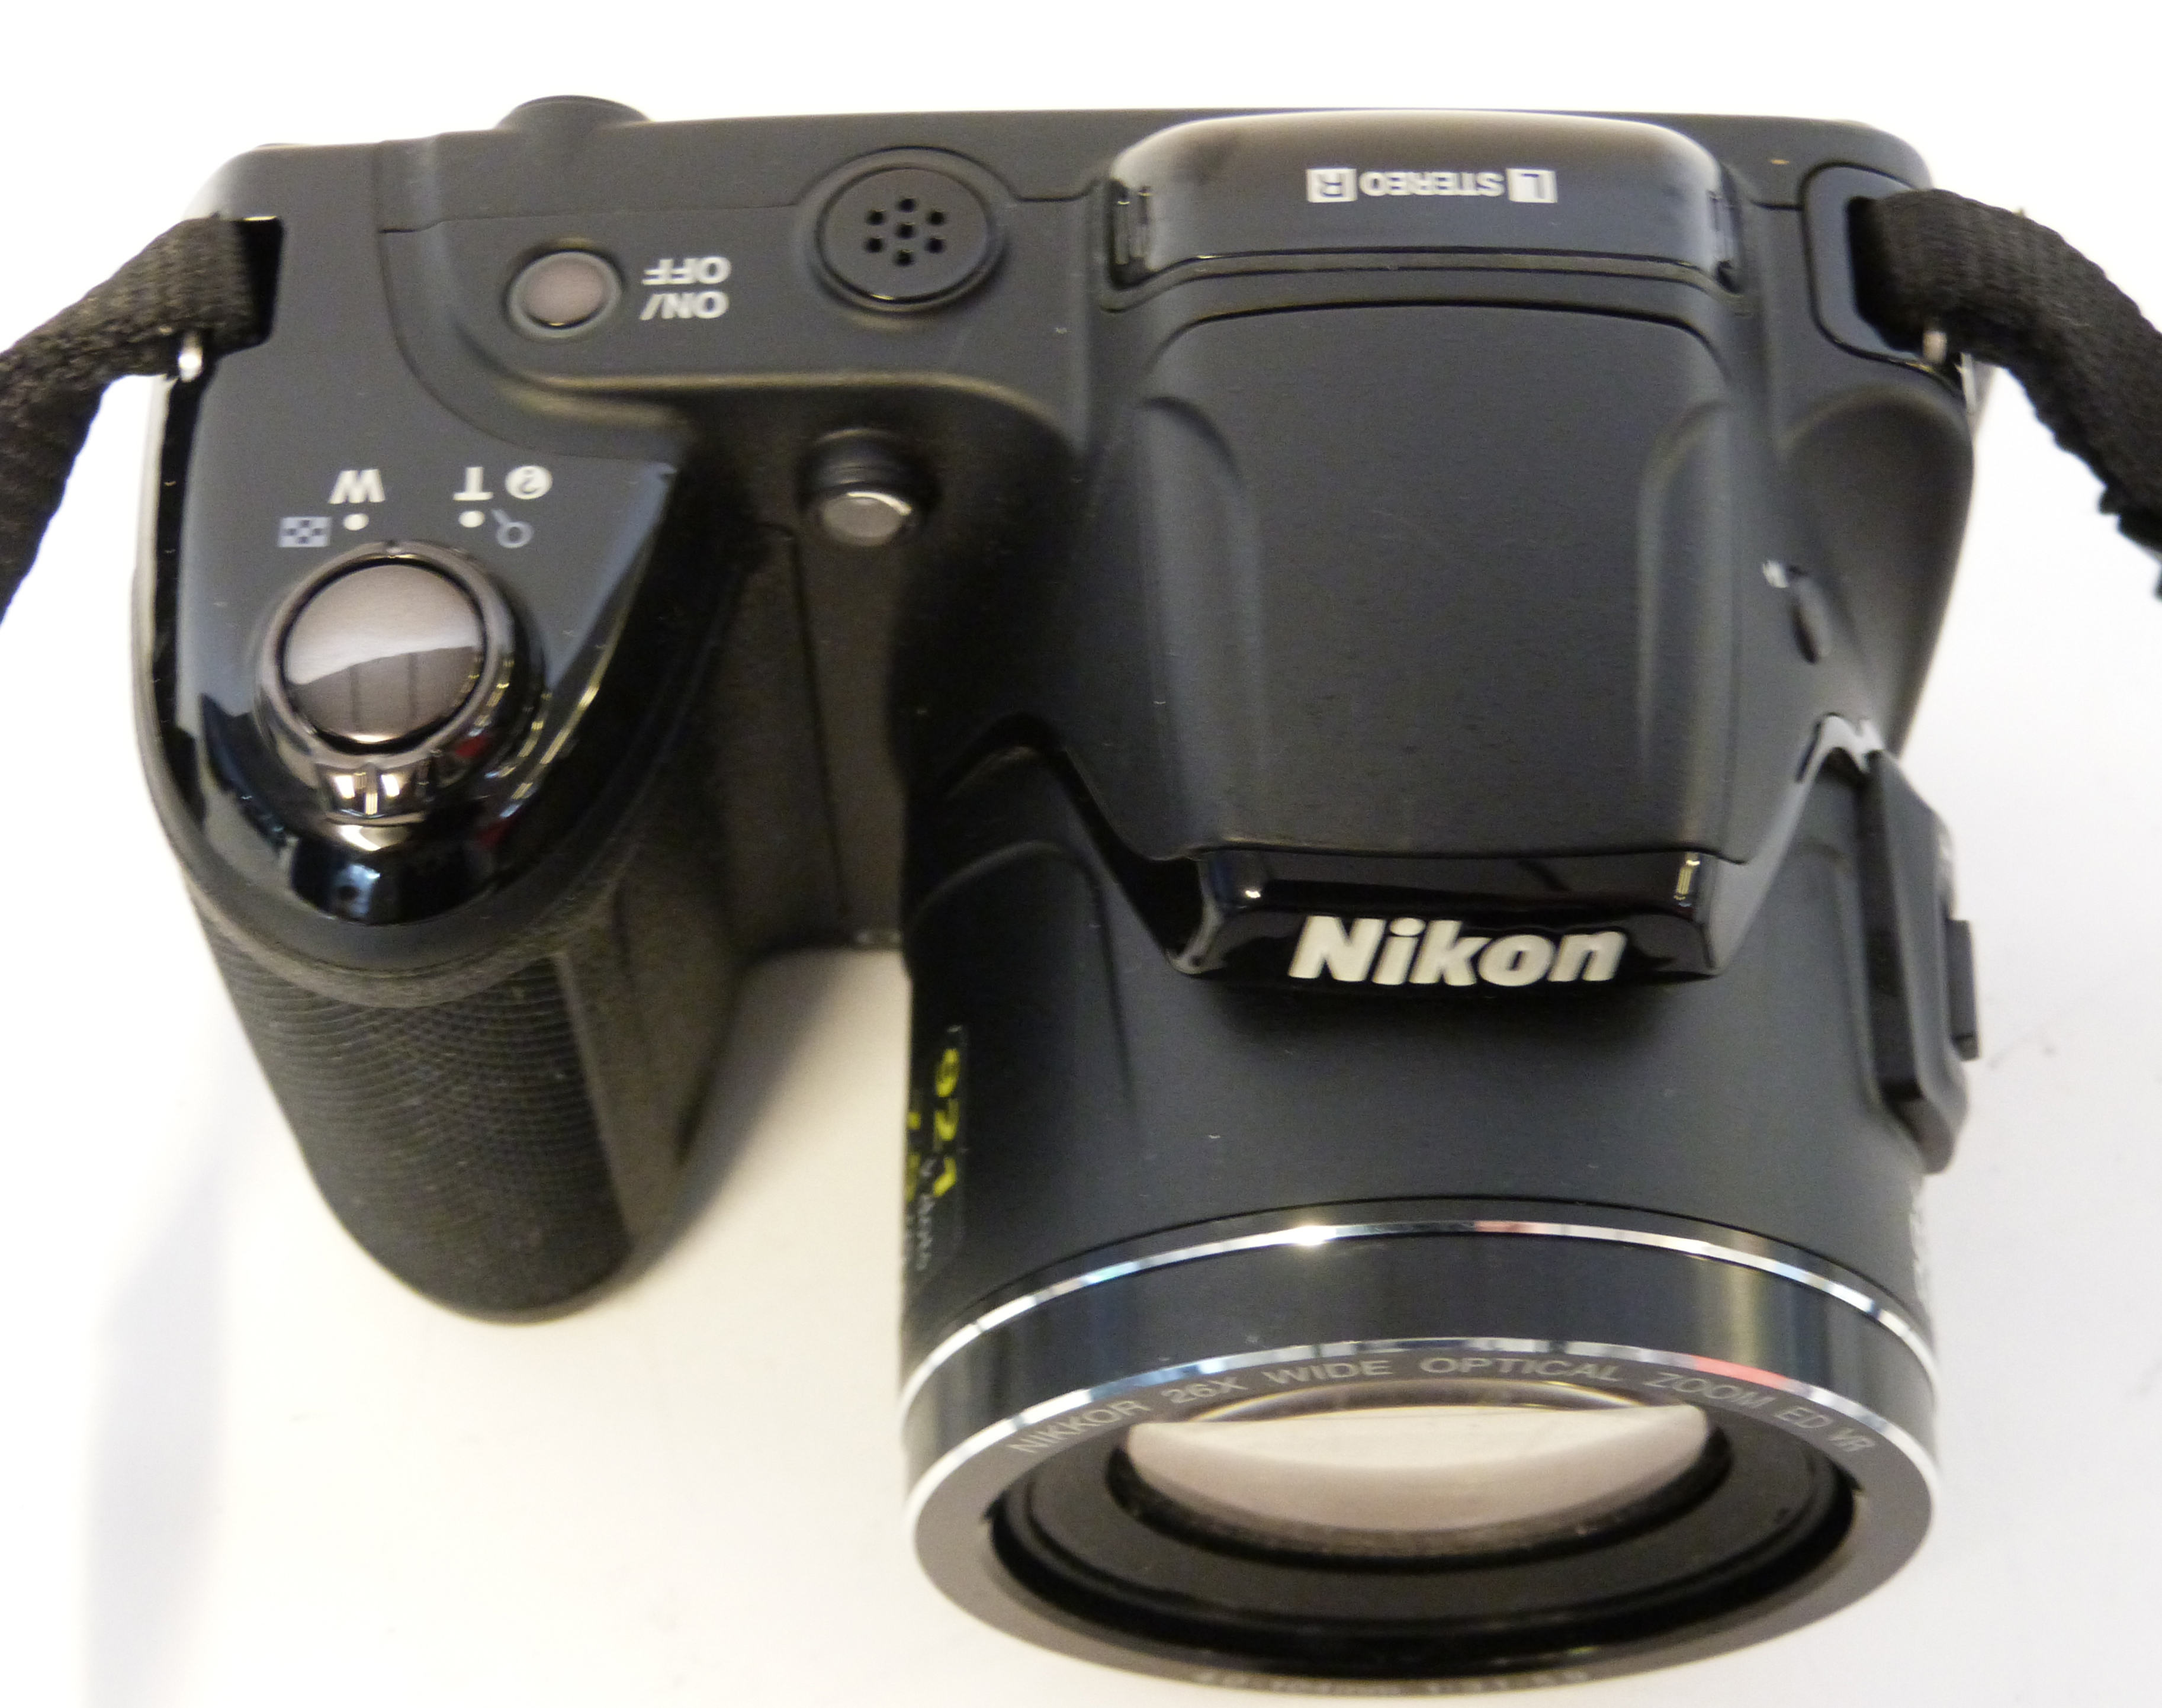 Nikon Coolpix L810 digital camera plus manual and charger - Image 4 of 5